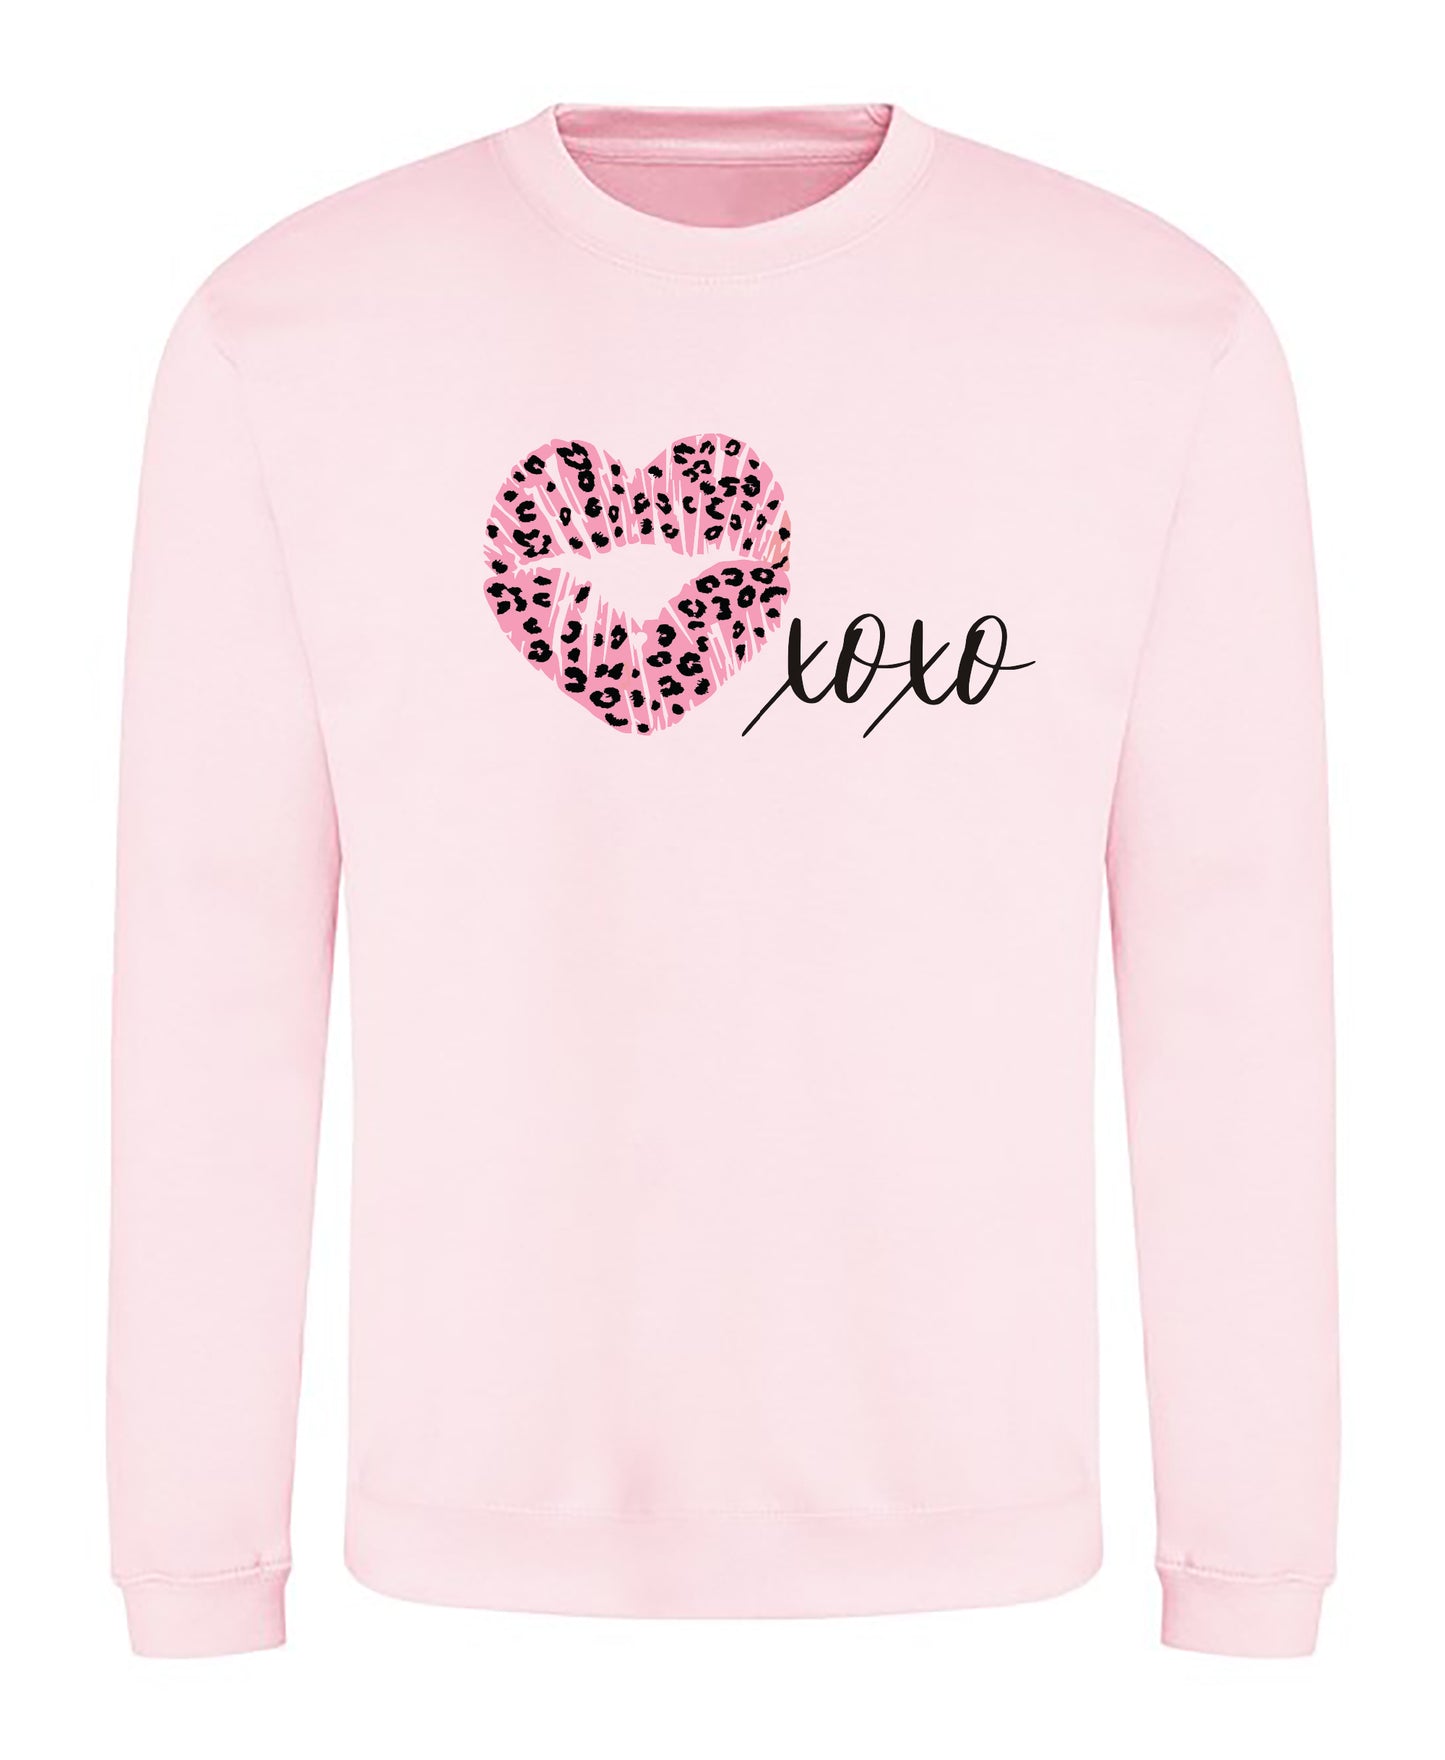 Valentine's Day Promotional Sweatshirt